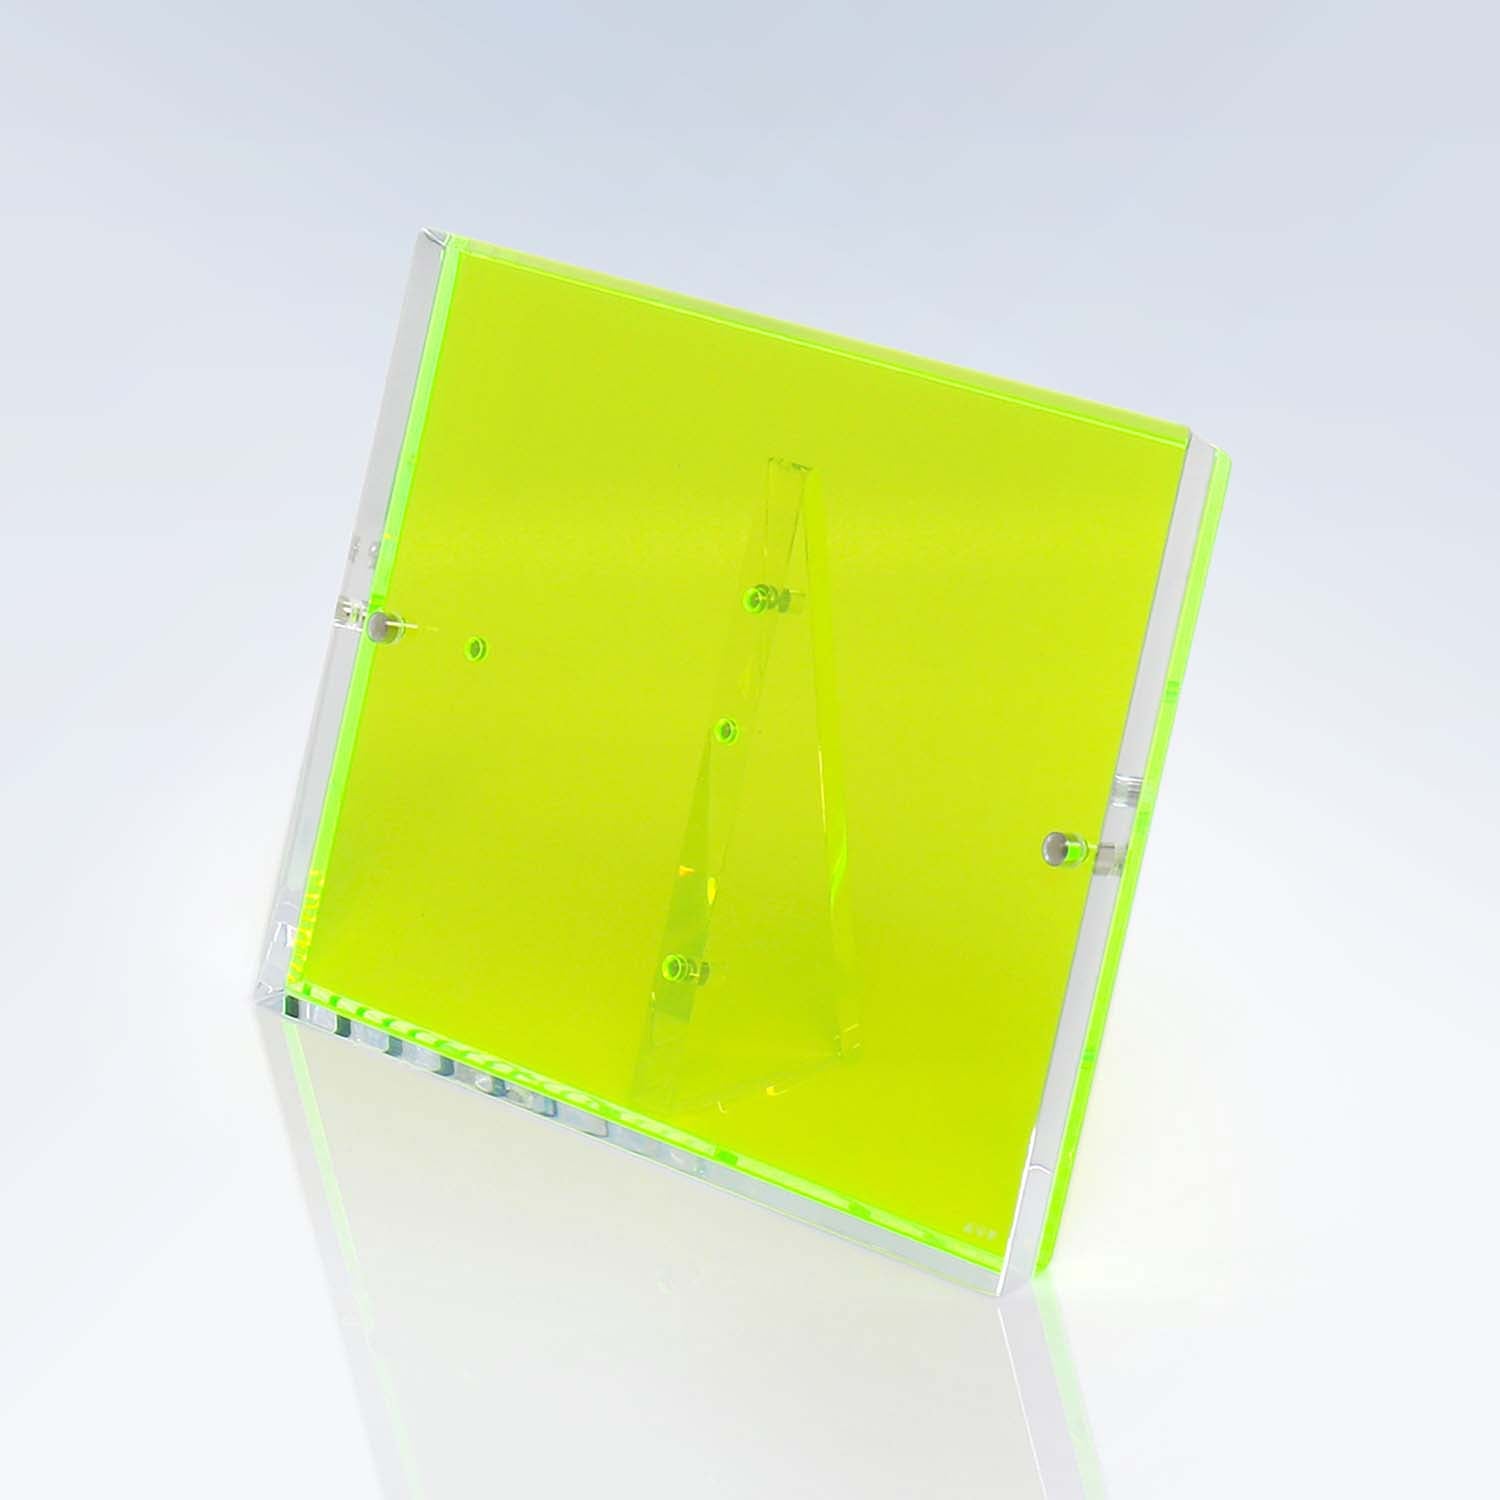 Neon green acrylic box emits a subtle green glow.